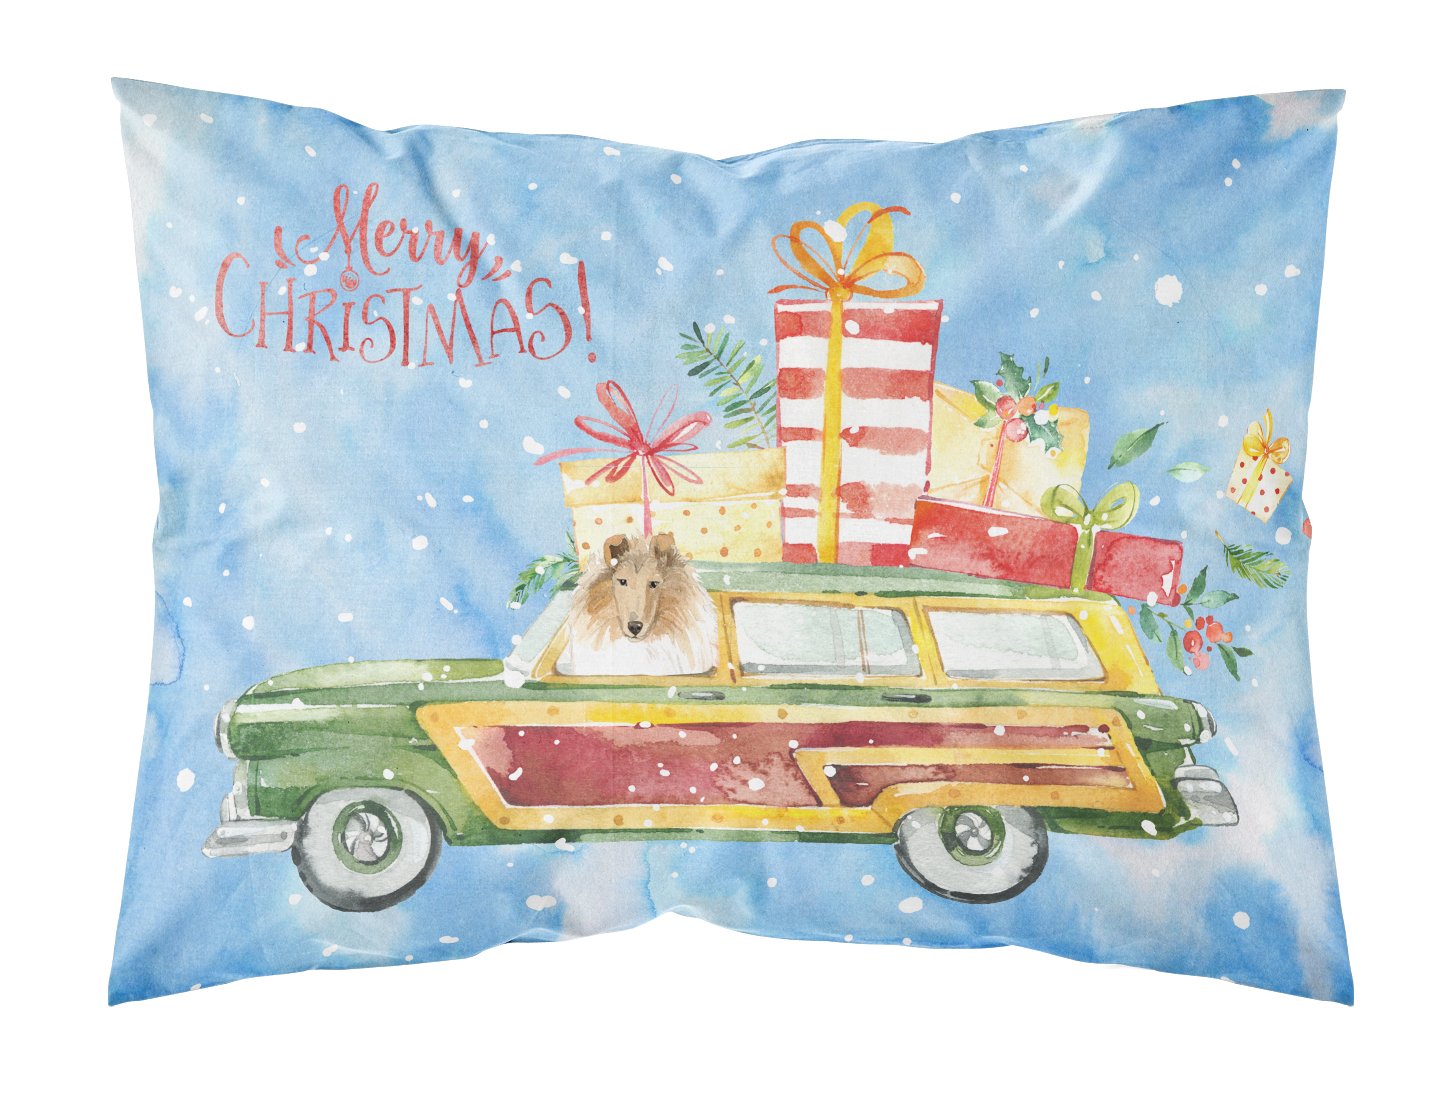 Merry Christmas Collie Fabric Standard Pillowcase CK2418PILLOWCASE by Caroline's Treasures